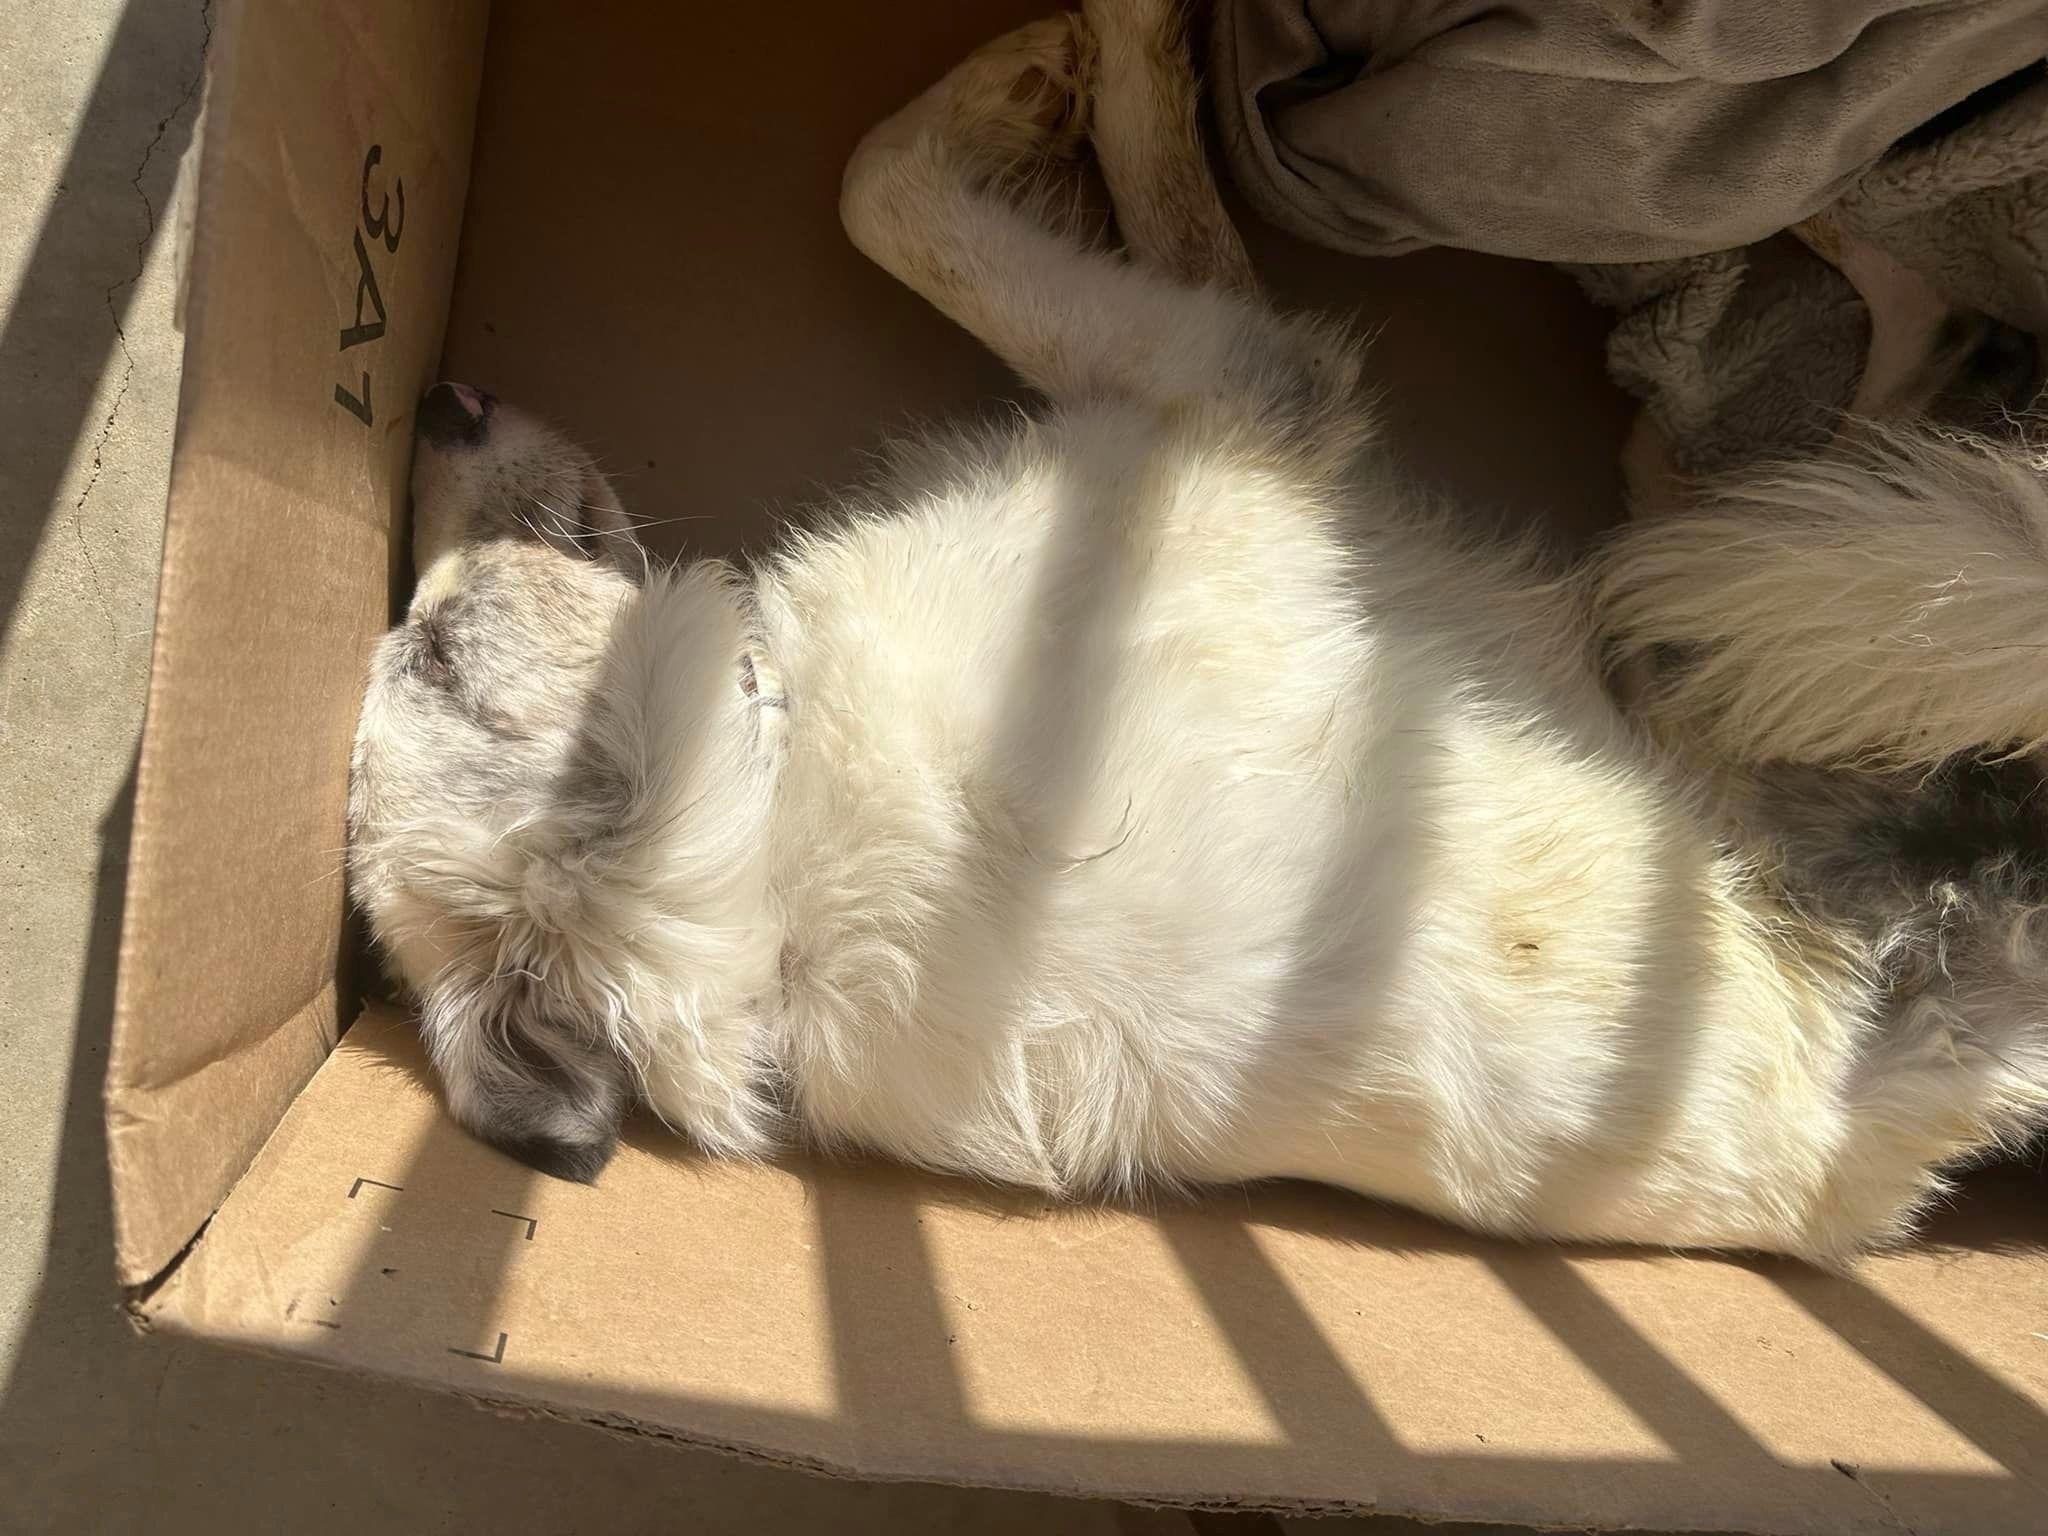 lifeless dog in a box